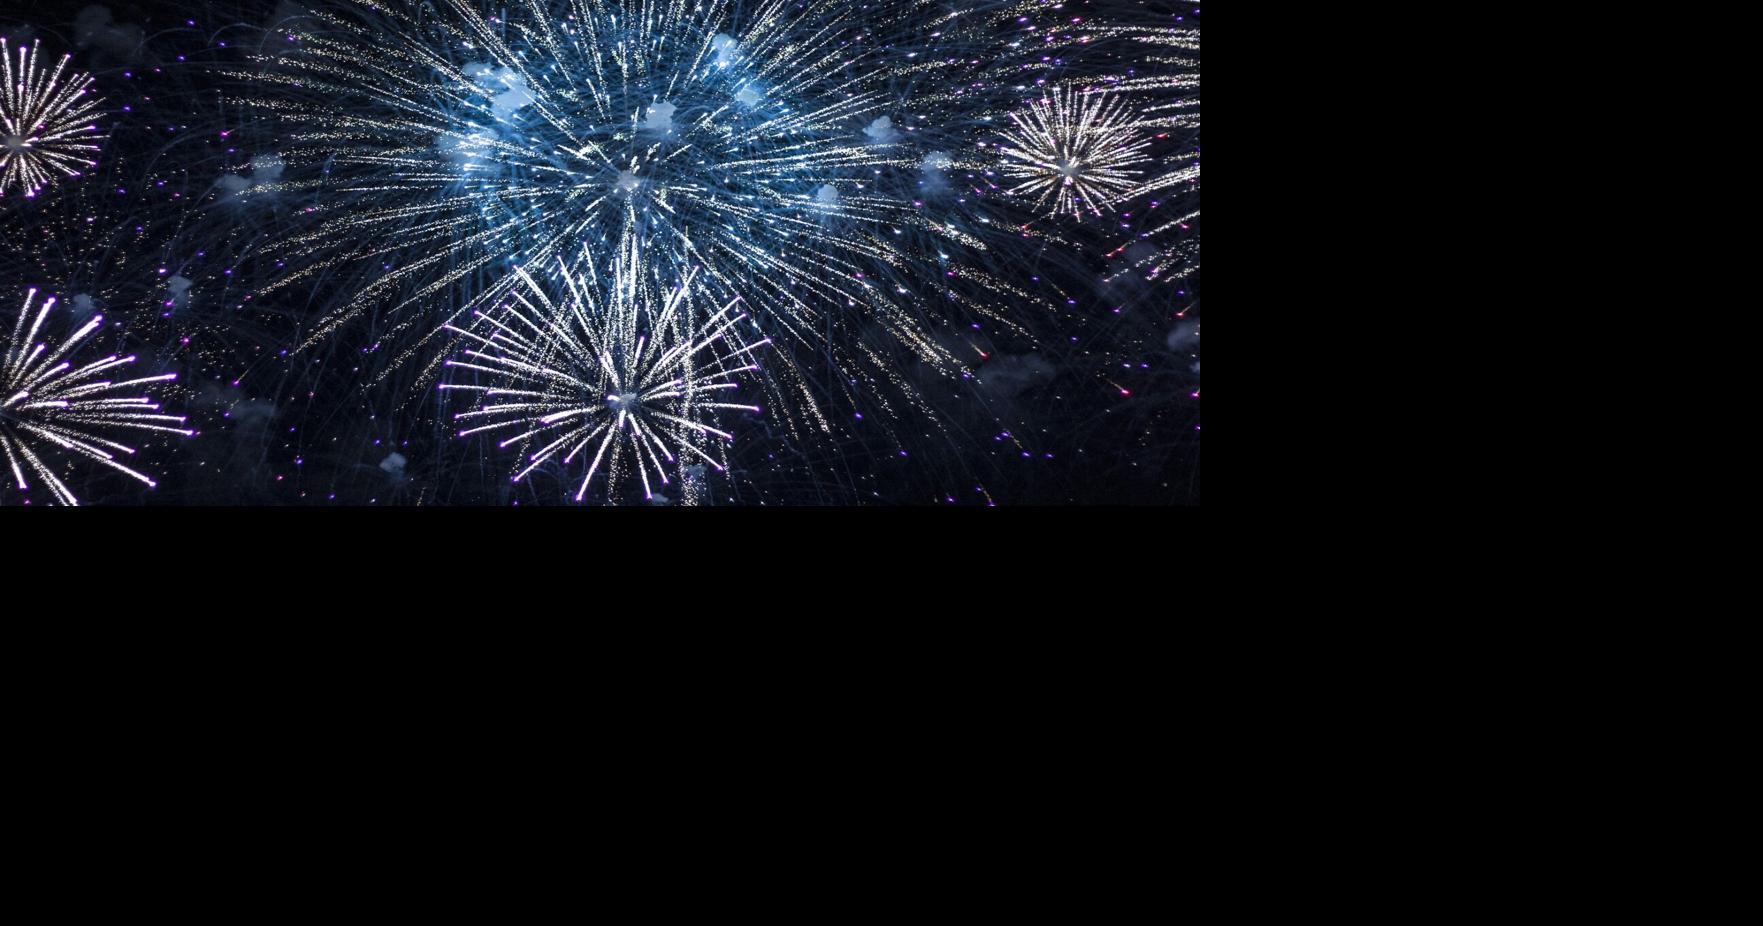 Sheboygan Says Parades, fireworks are Sheboygan's best 4th of July